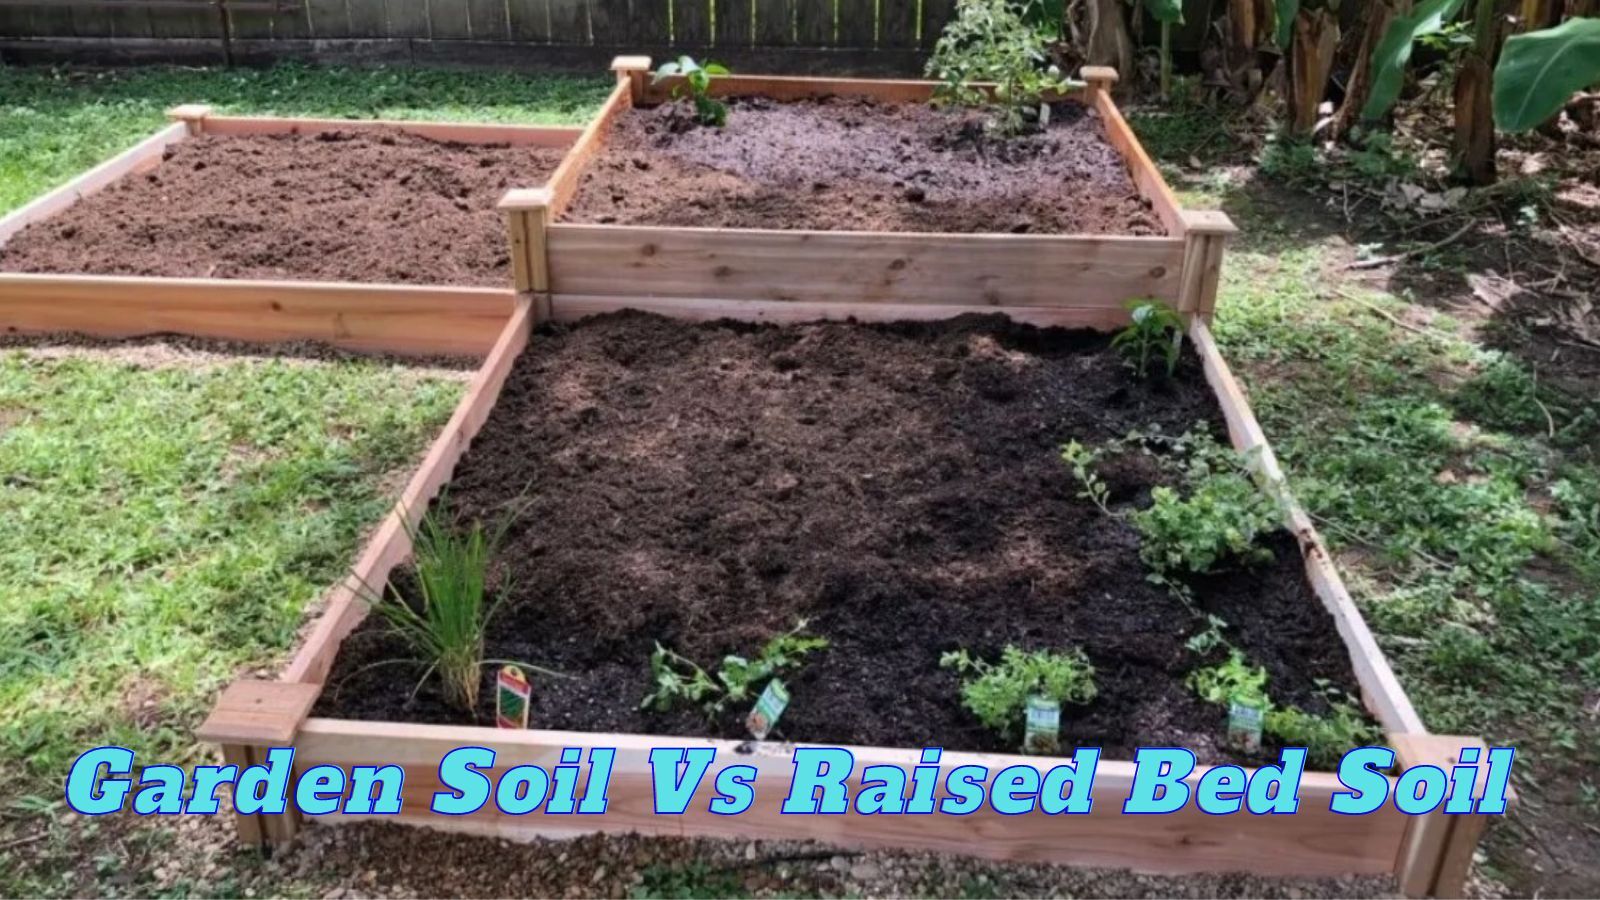 Garden Soil Vs Raised Bed Soil: What's the Difference?